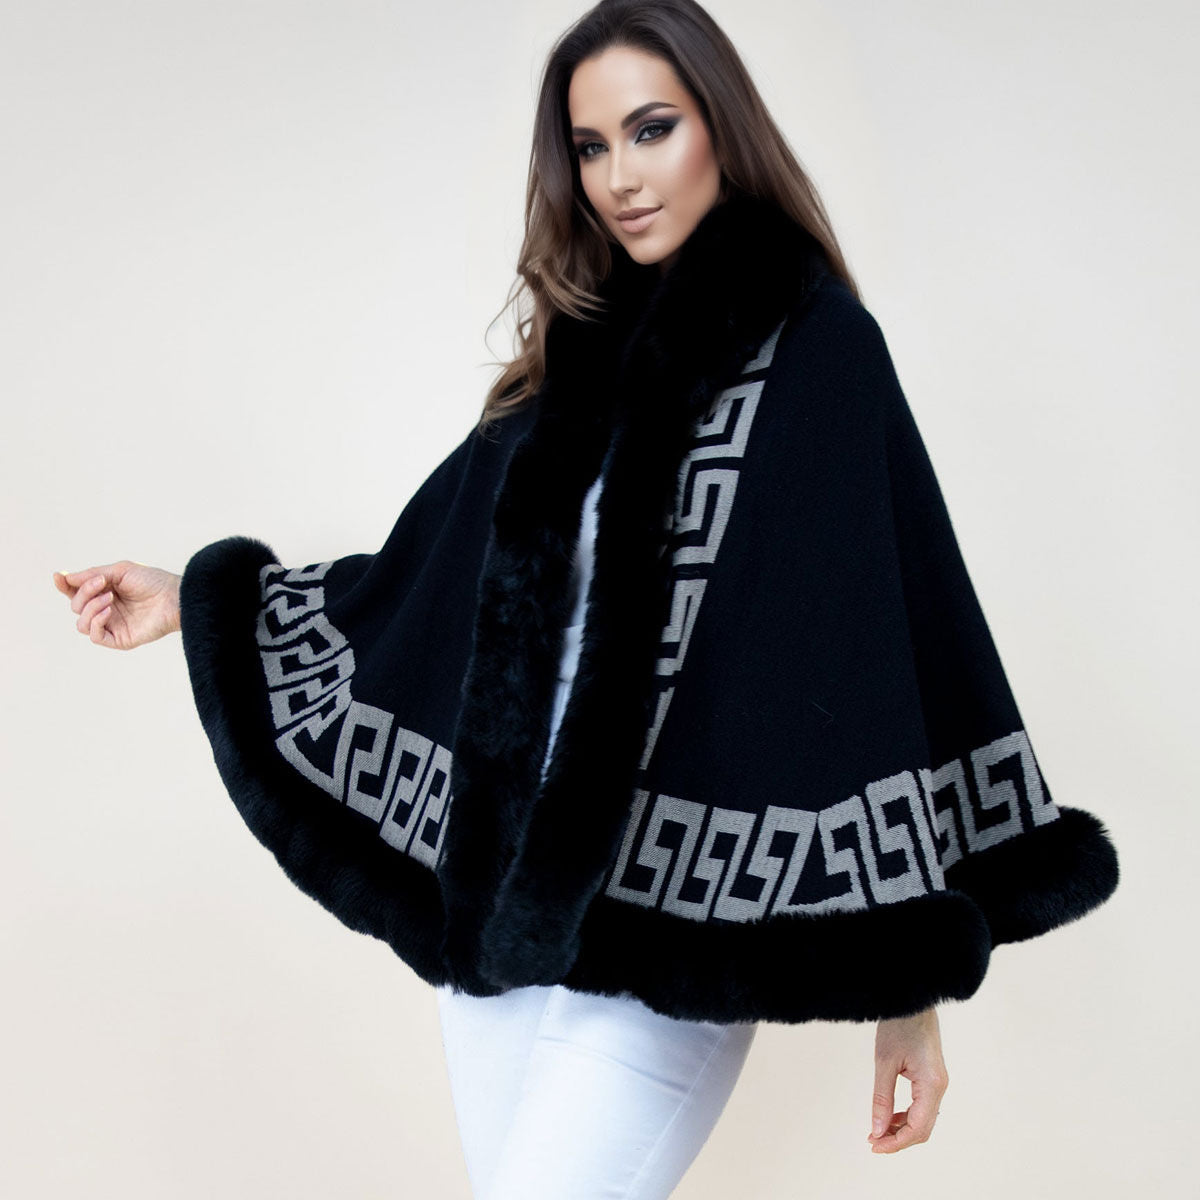 Shawl Cape Ruana Black Greek Fur Wrap for Women